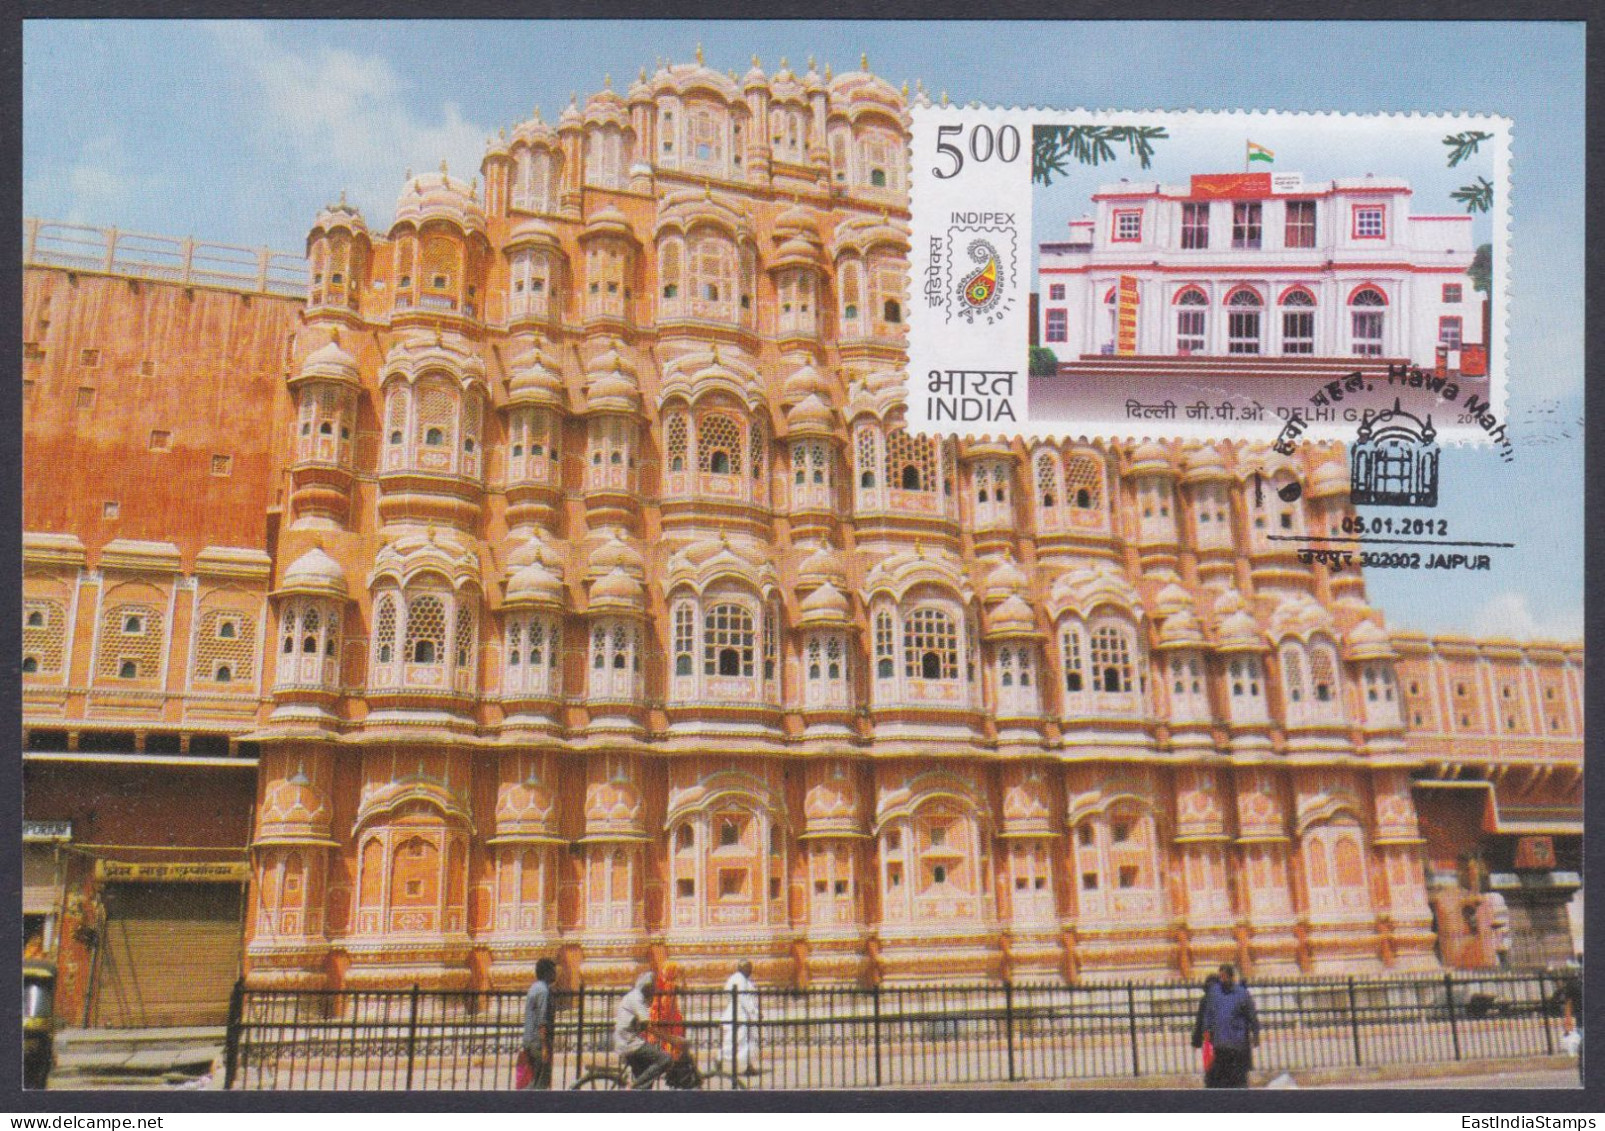 Inde India 2012 Maximum Card Hawa Mahal, Jaipur, Delhi G.P.O, Architecture, Rajput, Building, Medieval History, Max Card - Briefe U. Dokumente